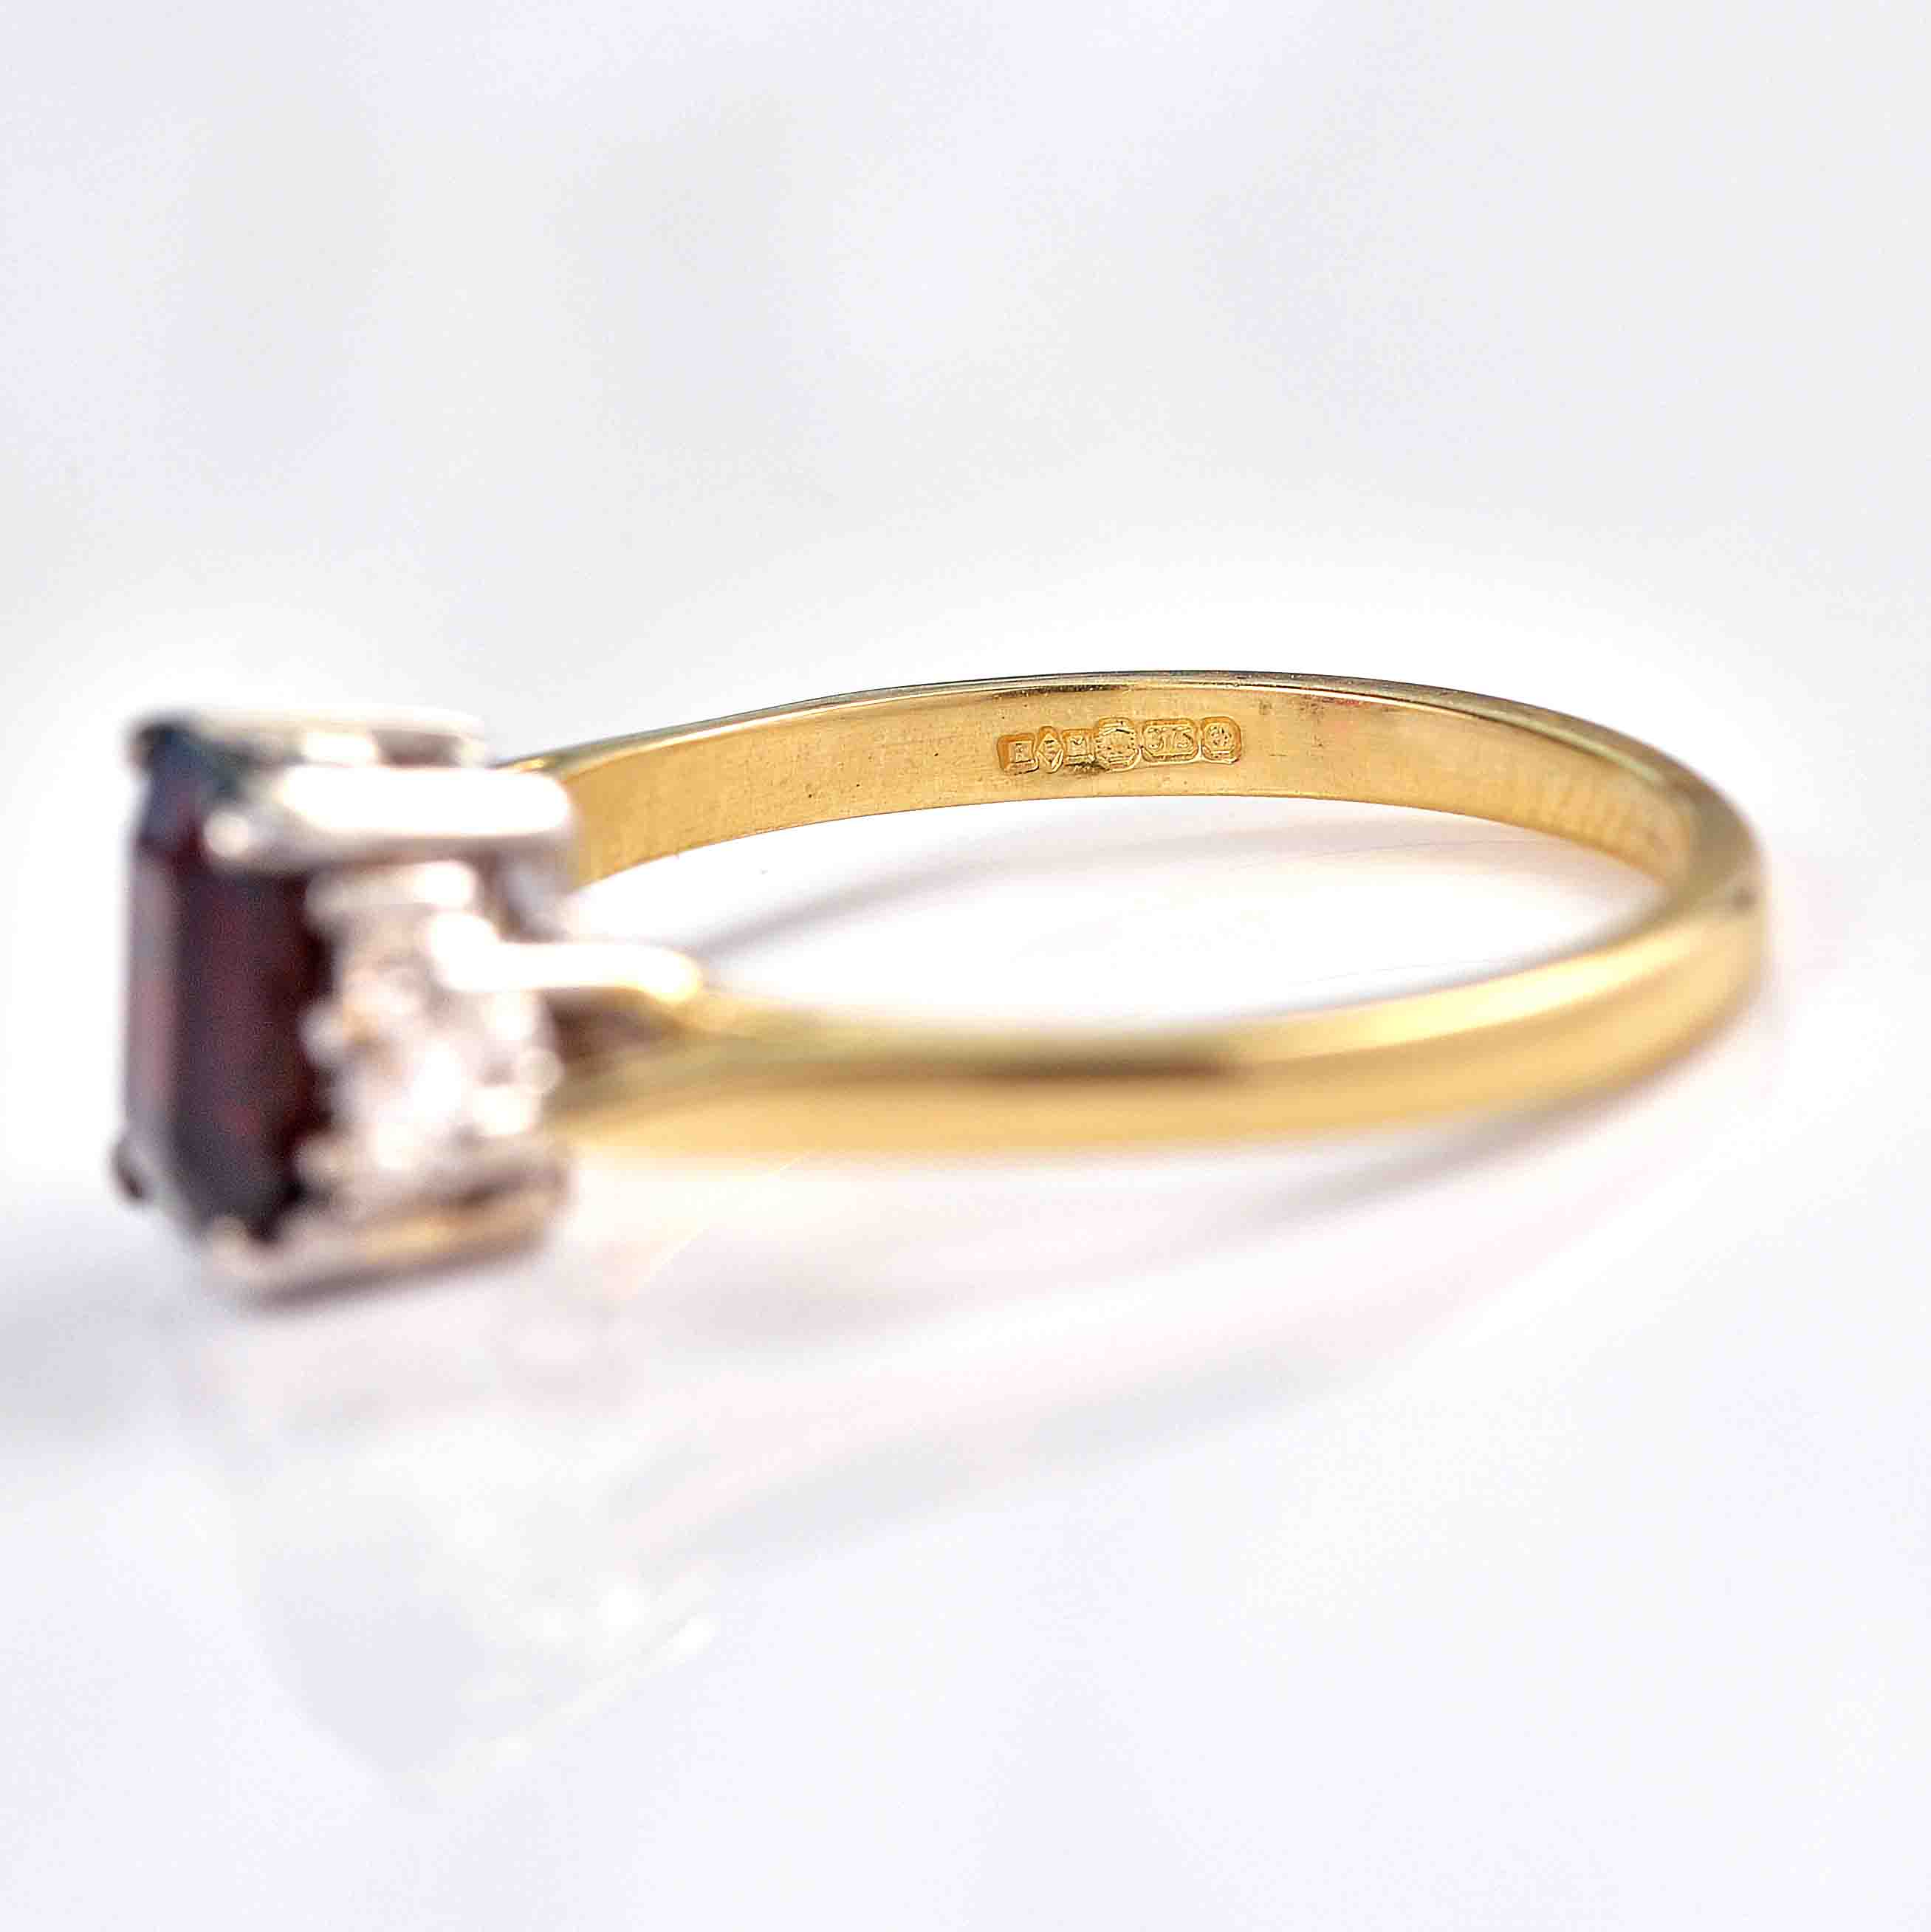 Ellibelle Jewellery Garnet & Diamond 9ct Gold Seven-Stone Ring